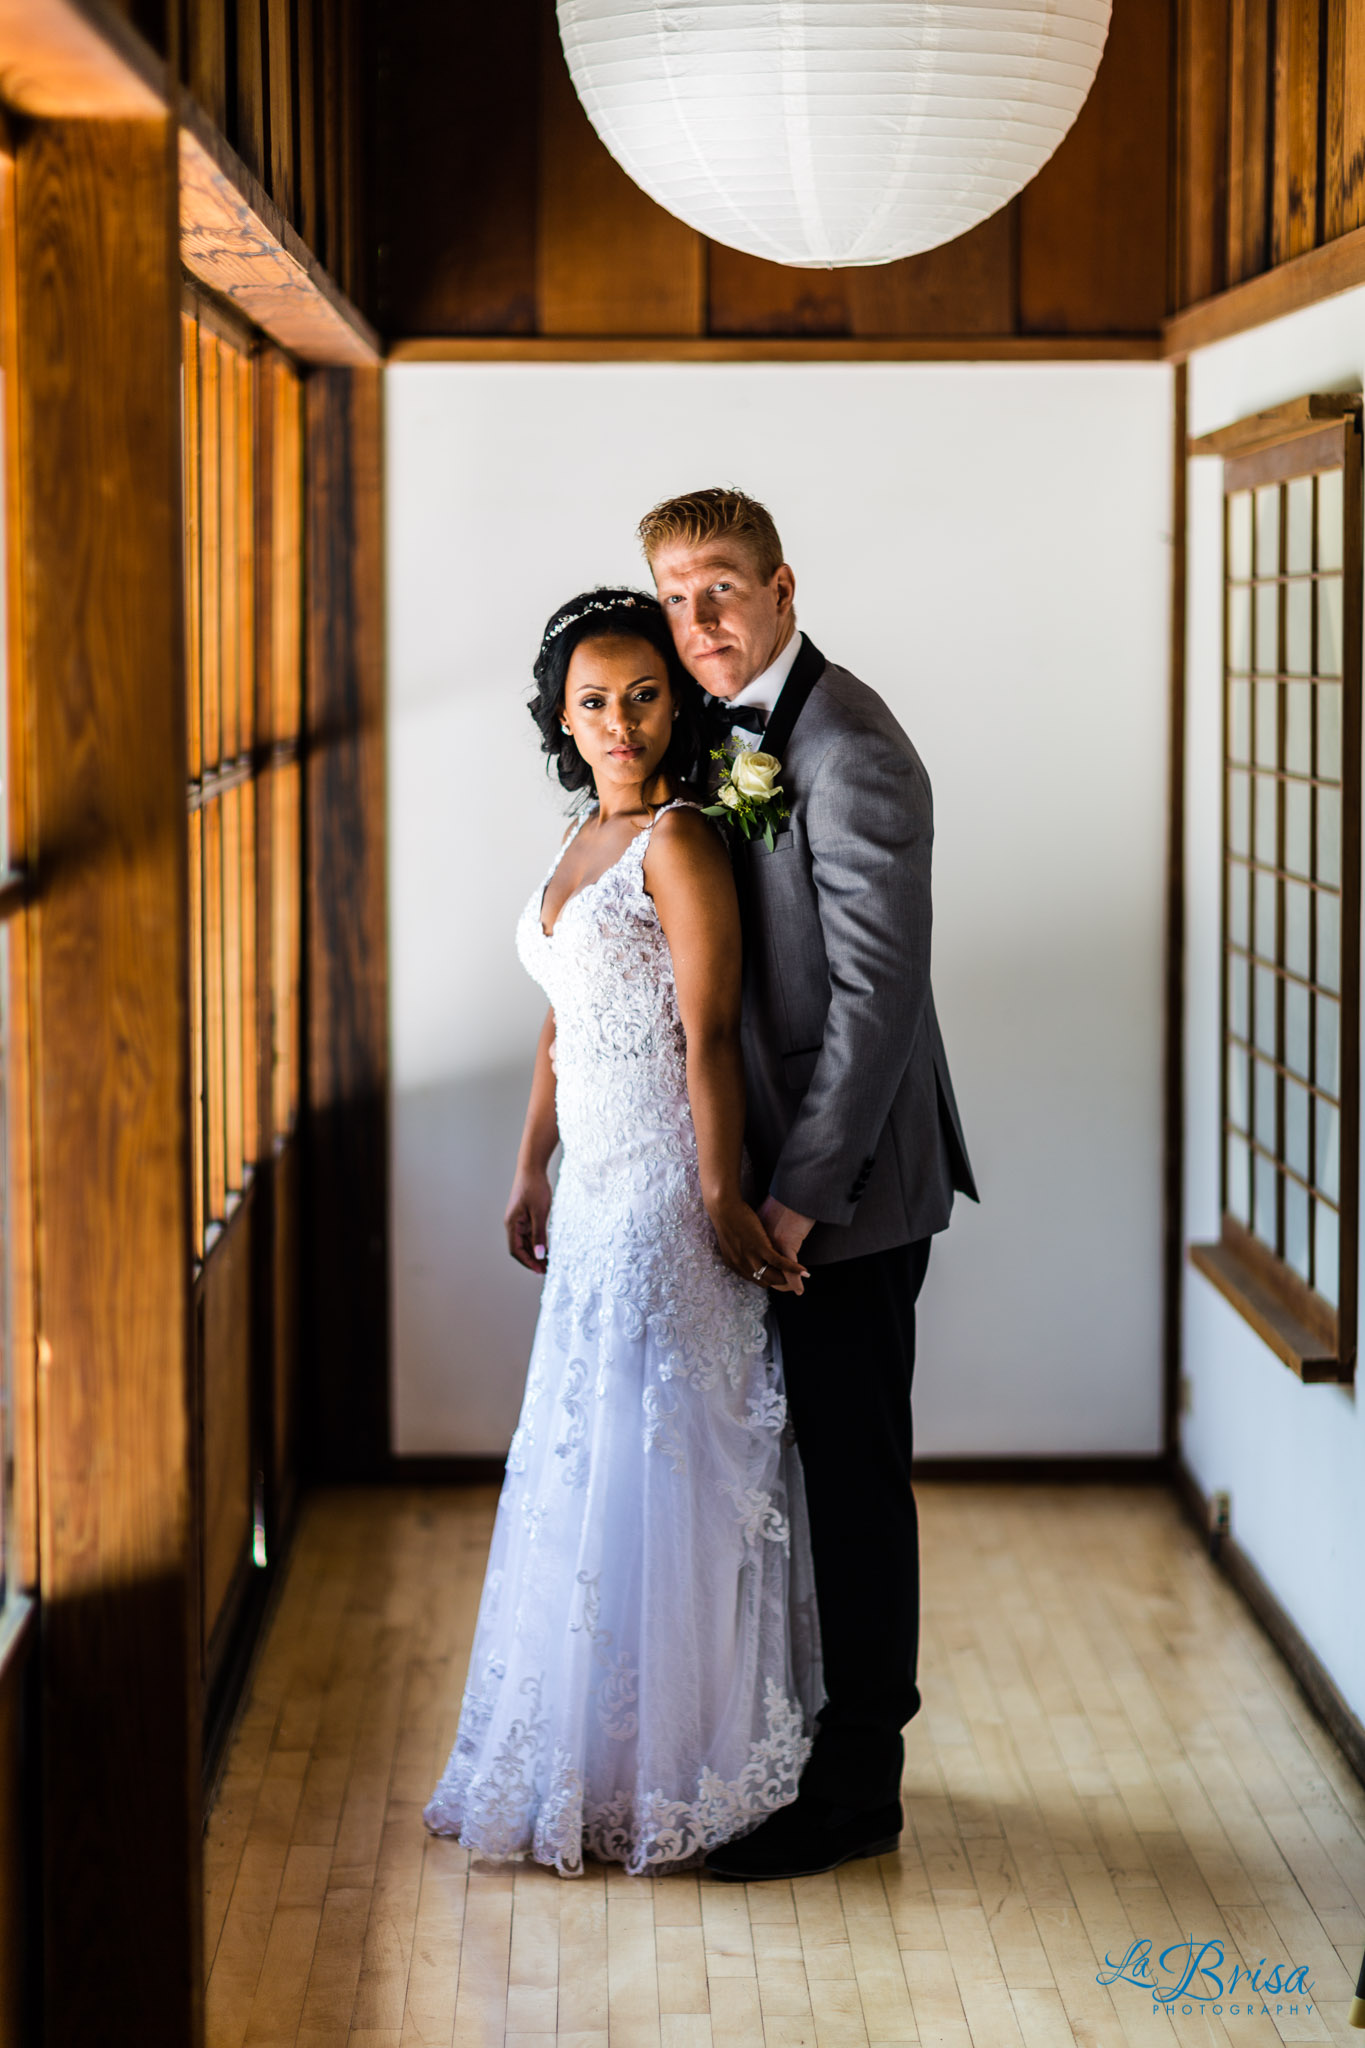 Hiledana & Ian’s Hakone Gardens Wedding Ceremony | The GlassHouse Wedding Reception